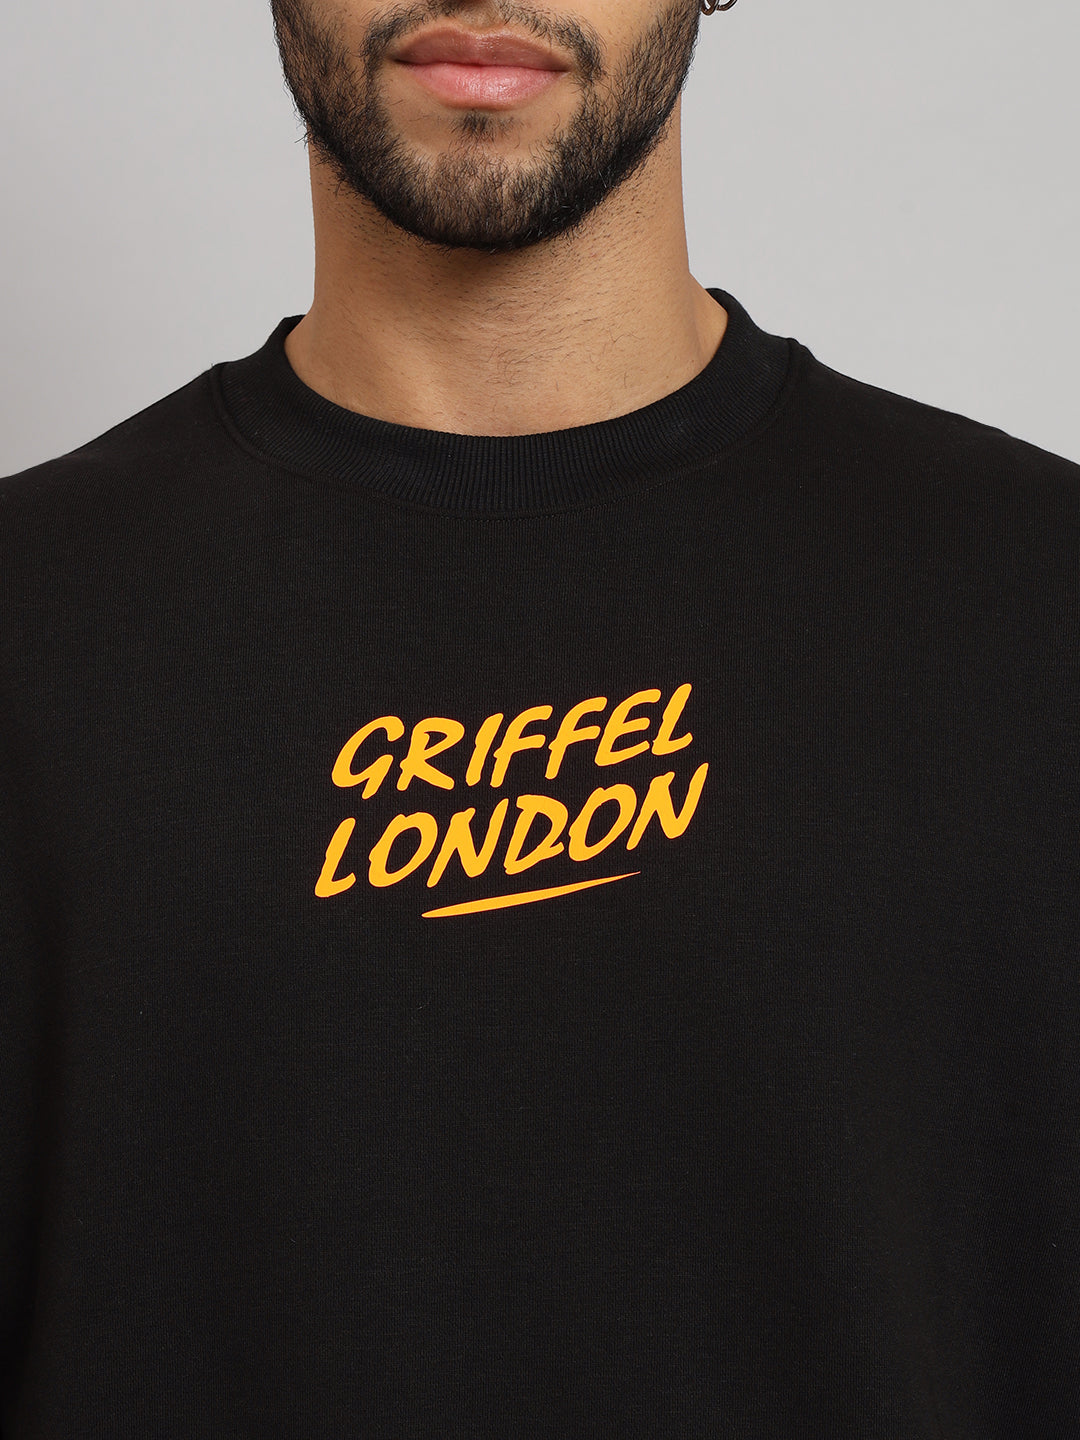 Griffel Men's Black WHY ARE YOU TO JUDGE Print Oversized Round Neck 100% Cotton Fleece Black Sweatshirt - griffel